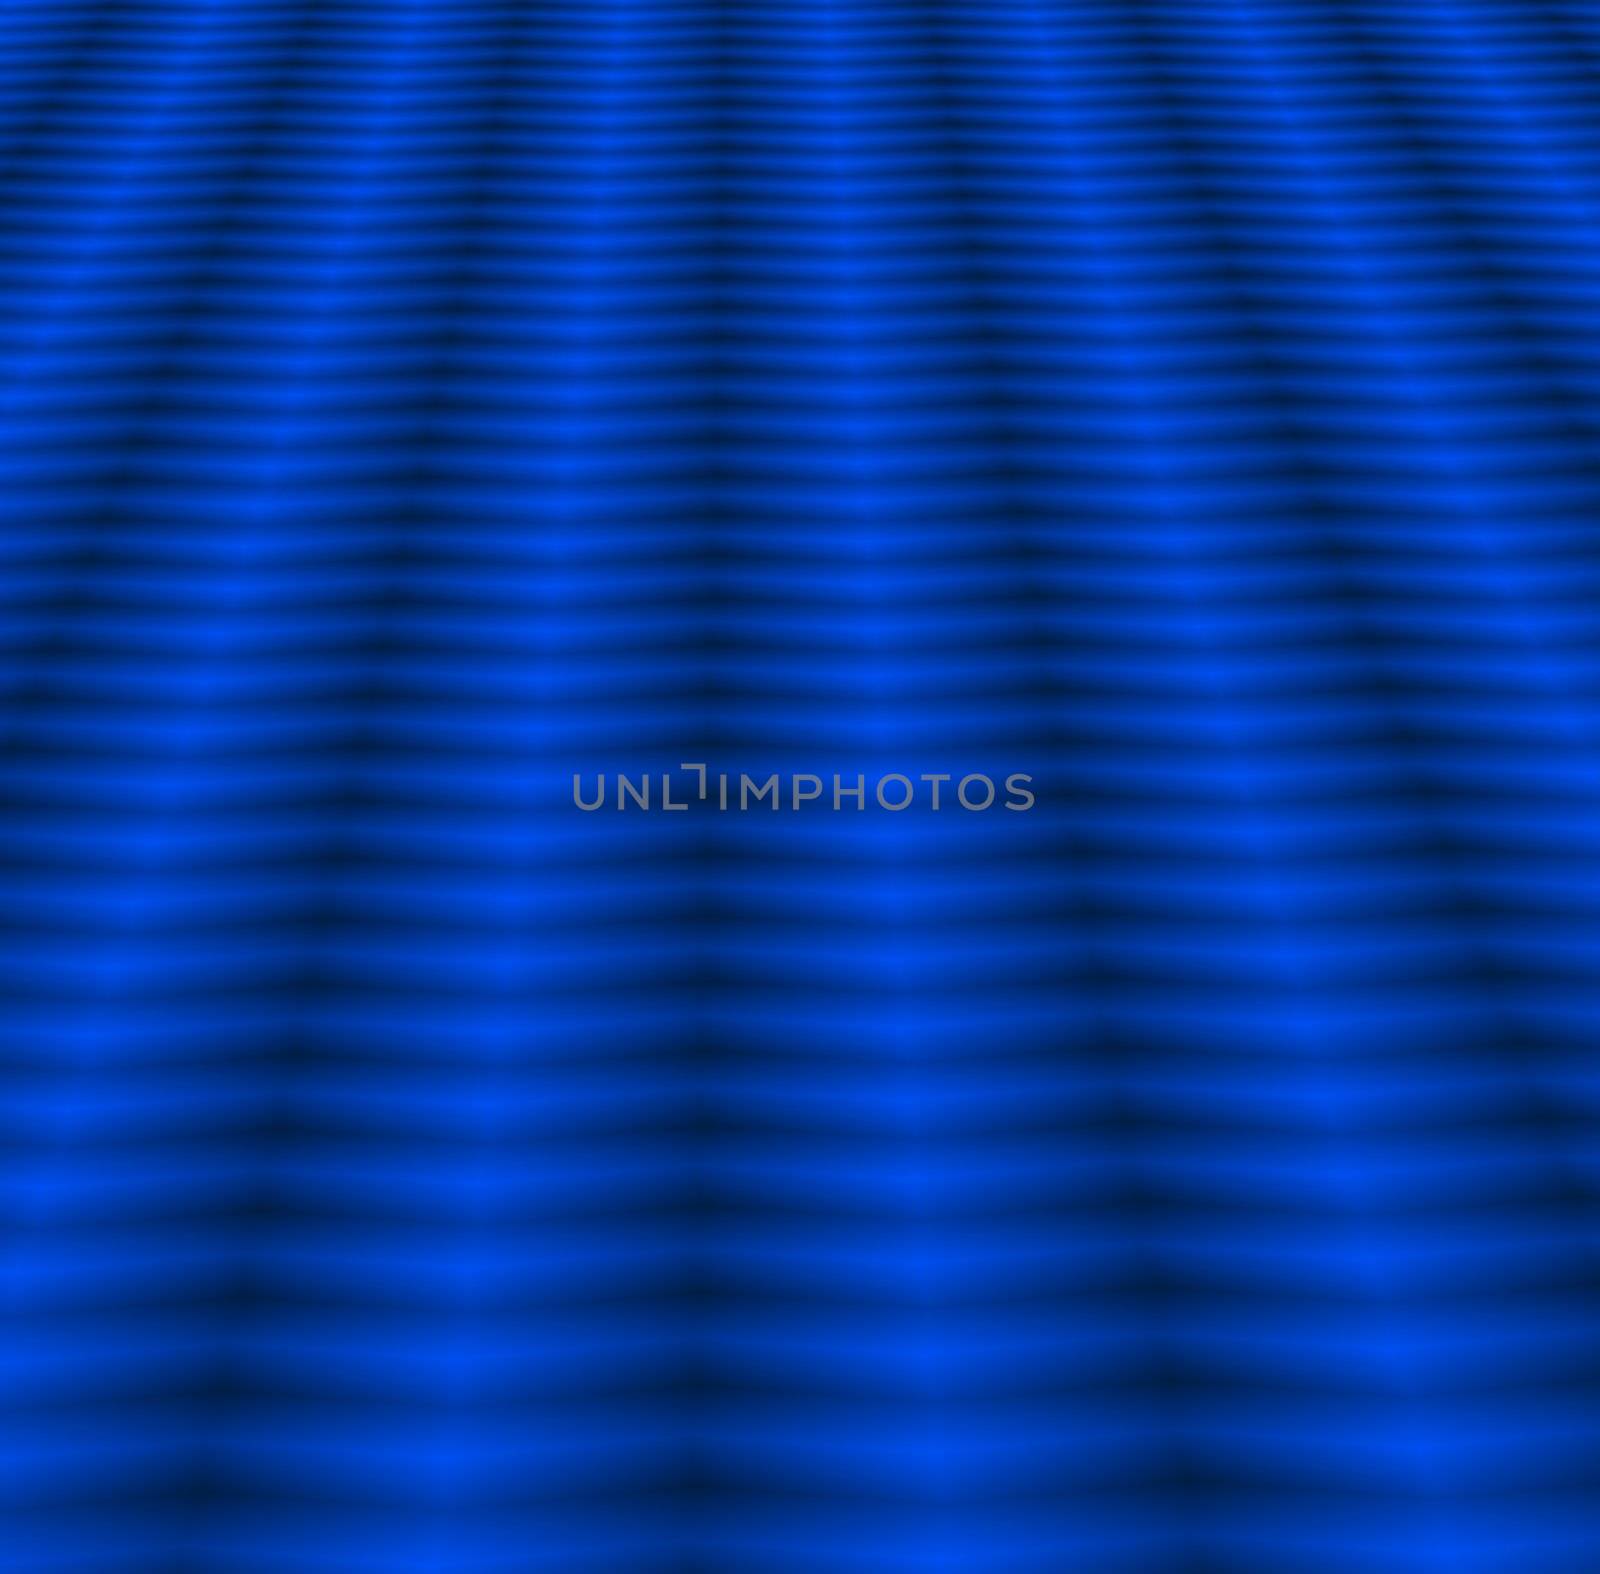  computer generated blue floor/ background